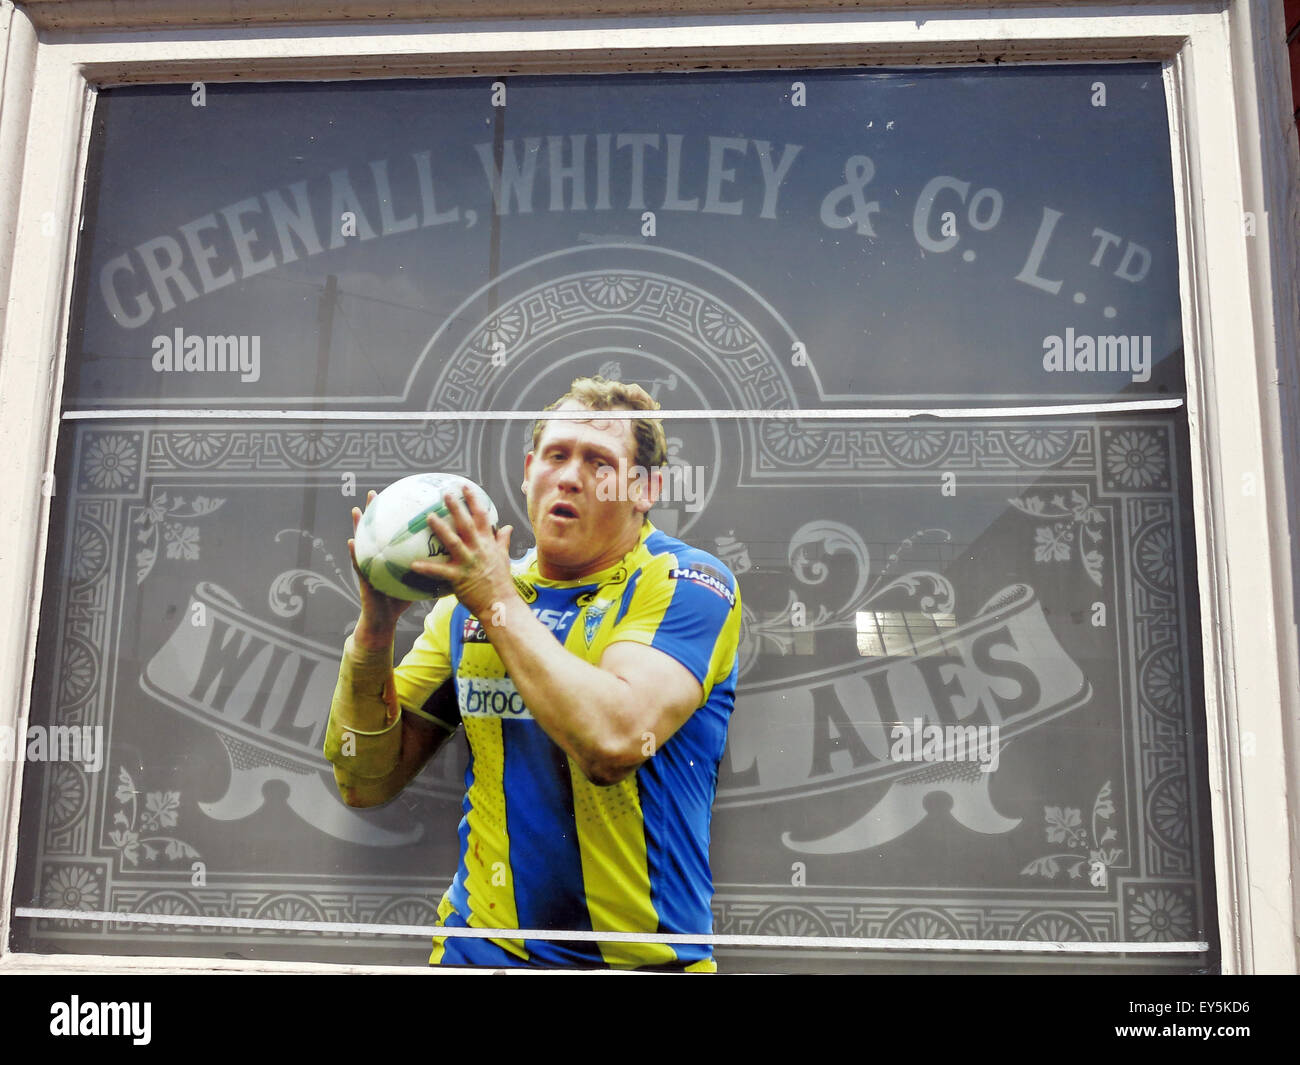 Greenall, Whitley, Wilderspool Ales, Rugby, Draht-Spieler im Pub-Fenster Stockfoto